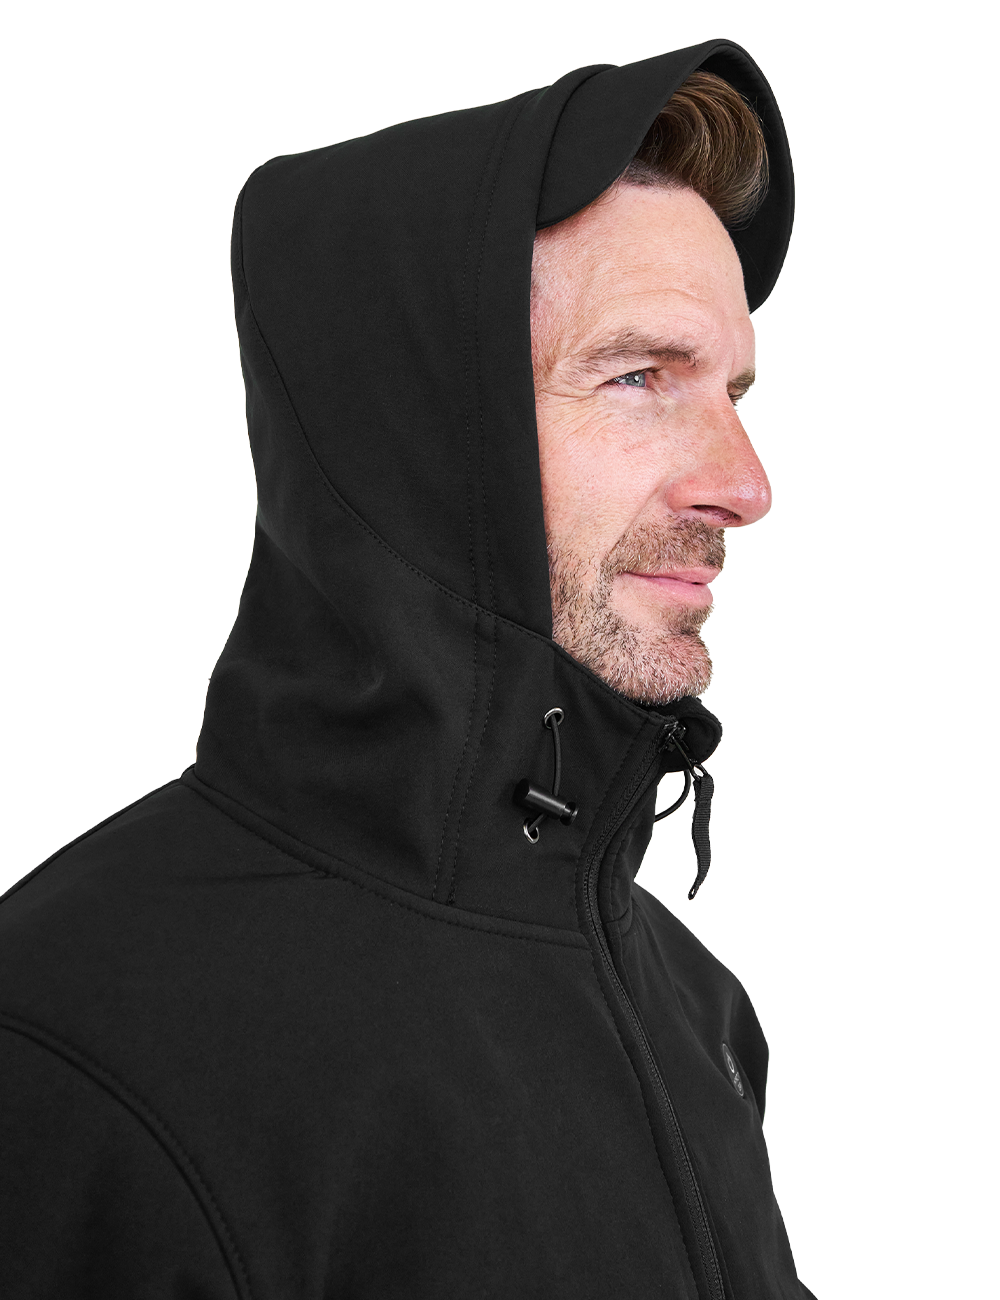 ANTARCTICA GEAR Heated Jacket for Men and Women, Winter Coat Soft Shell Heating Hood Jacket